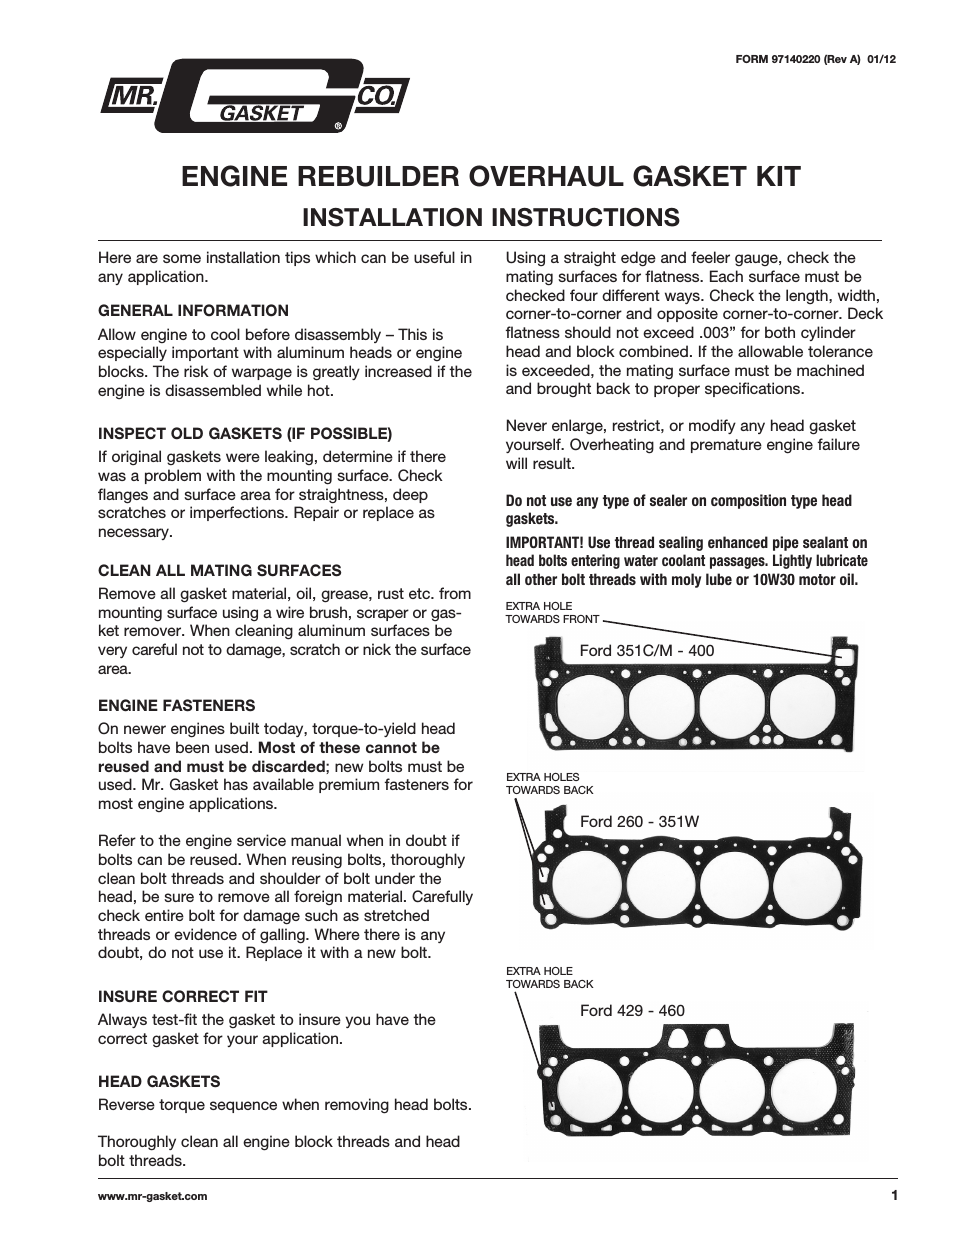 All Engine Builder Gaskets